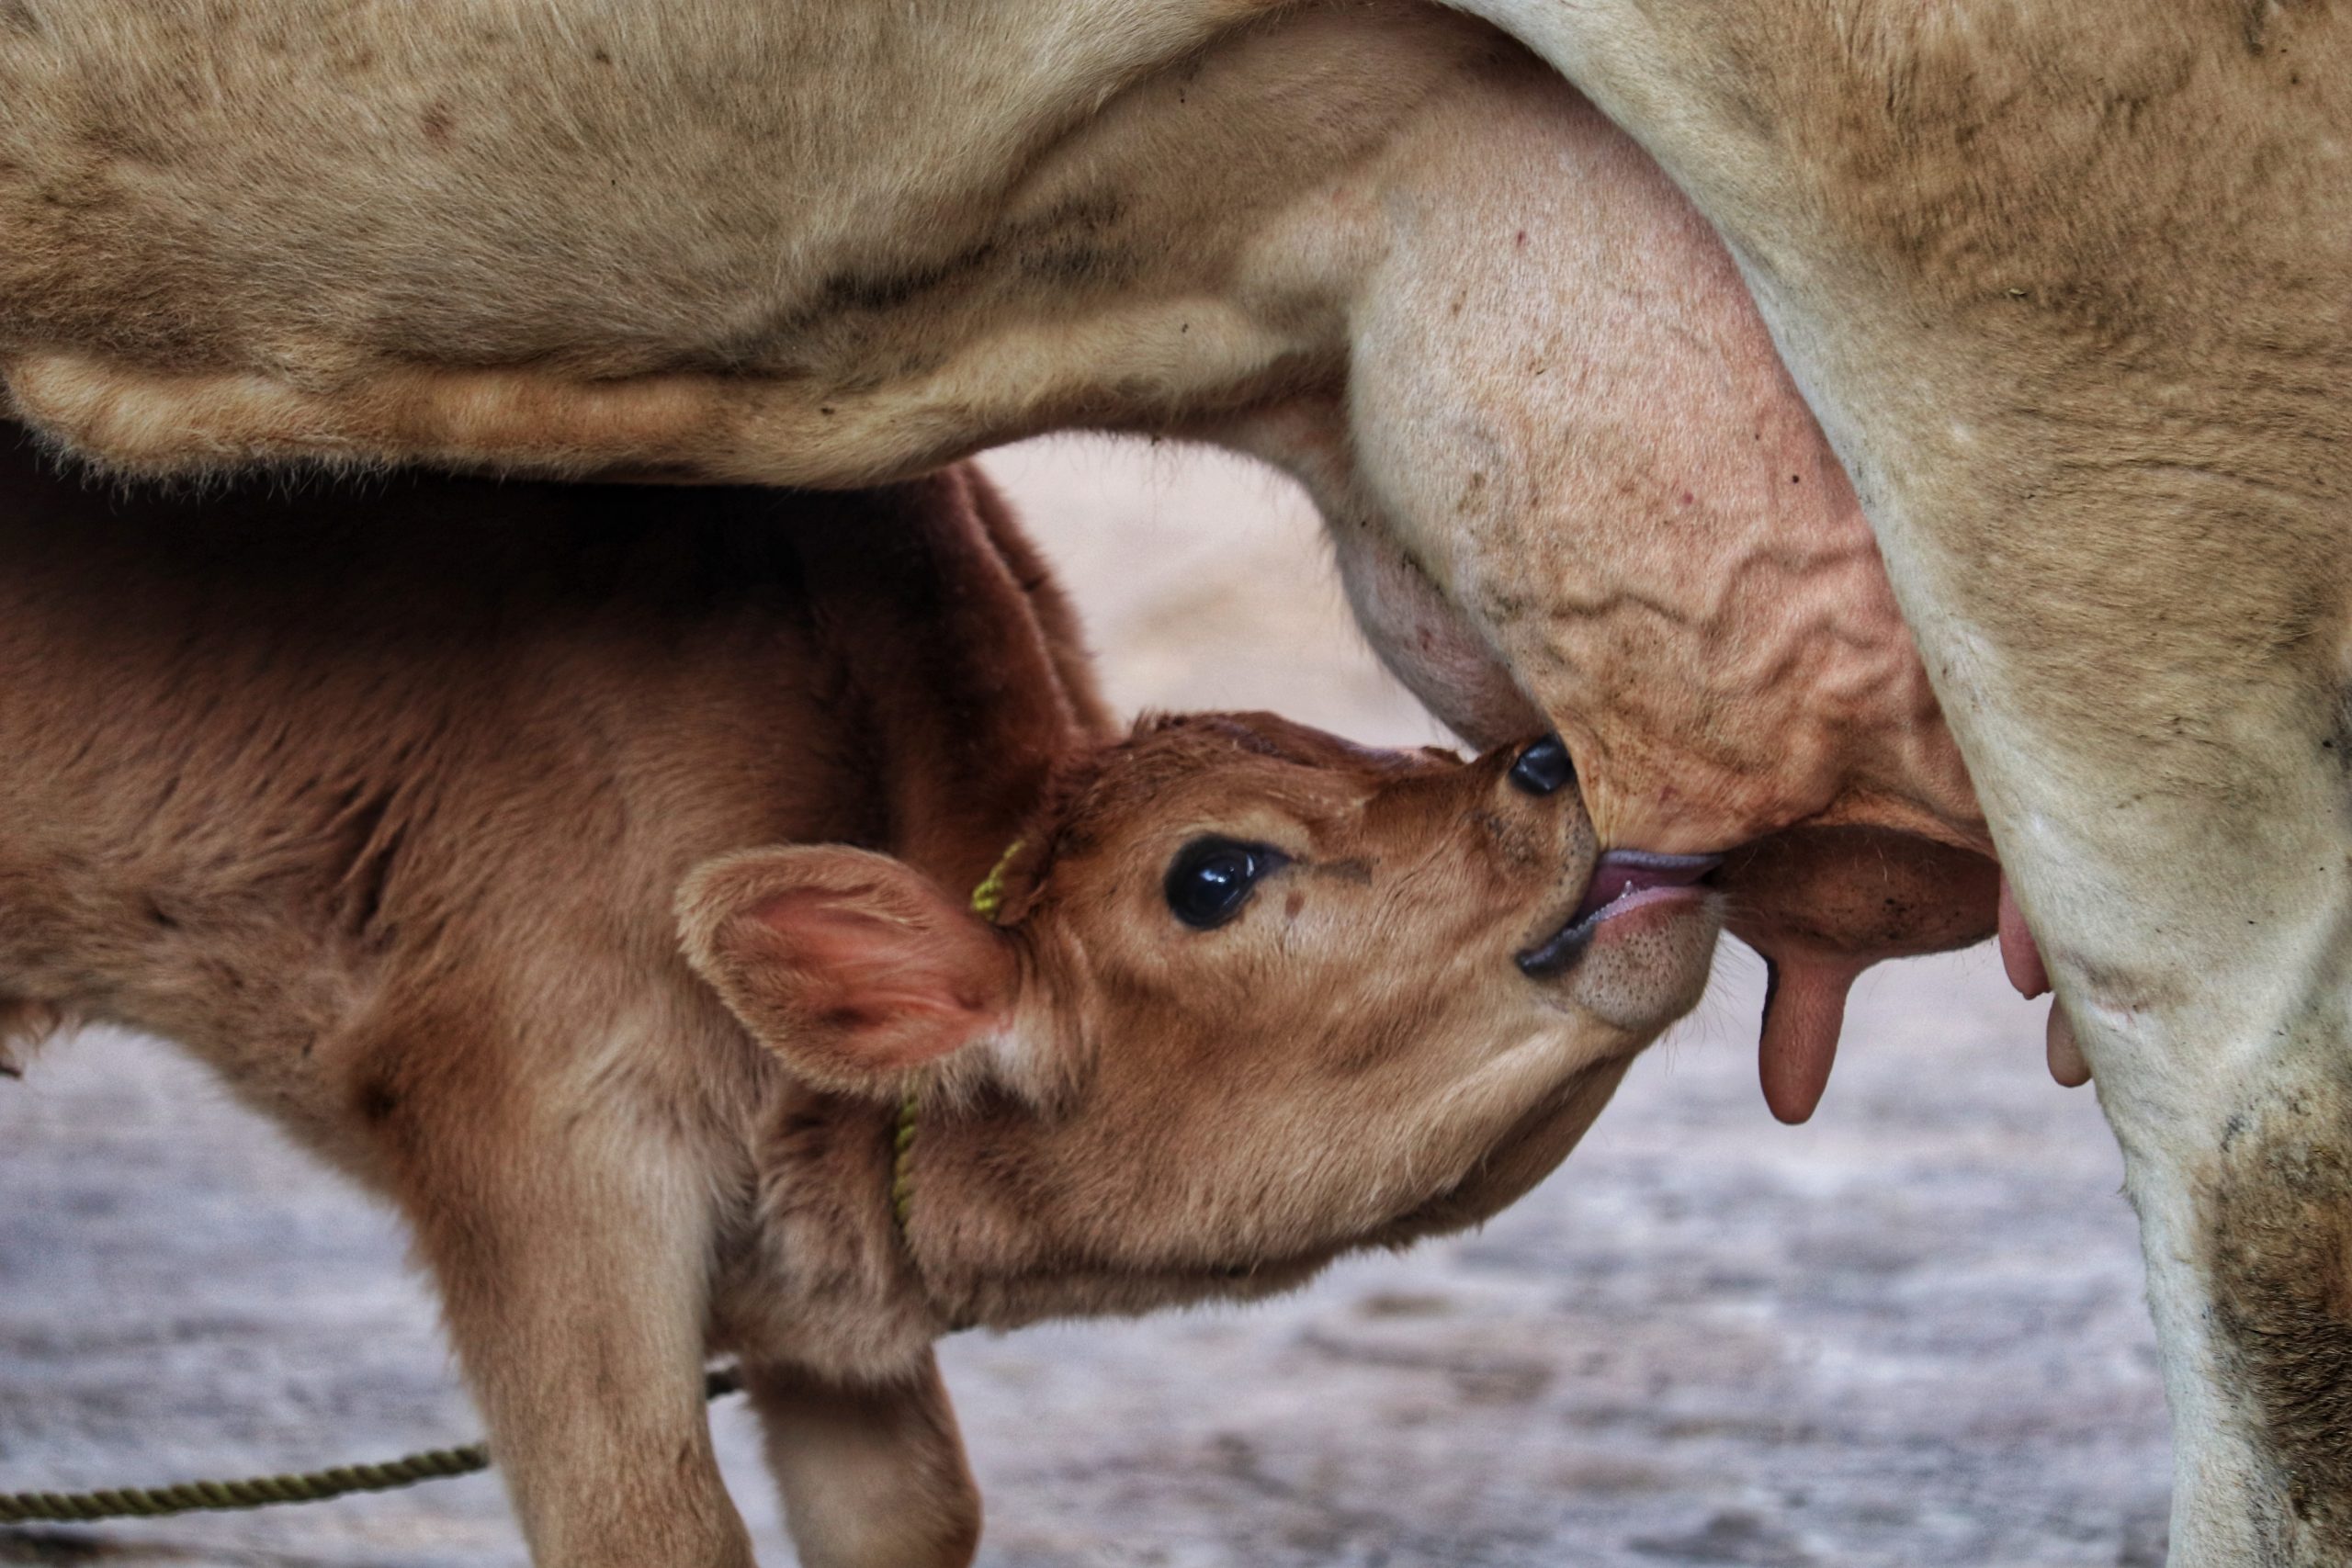 Cow feeding Calf